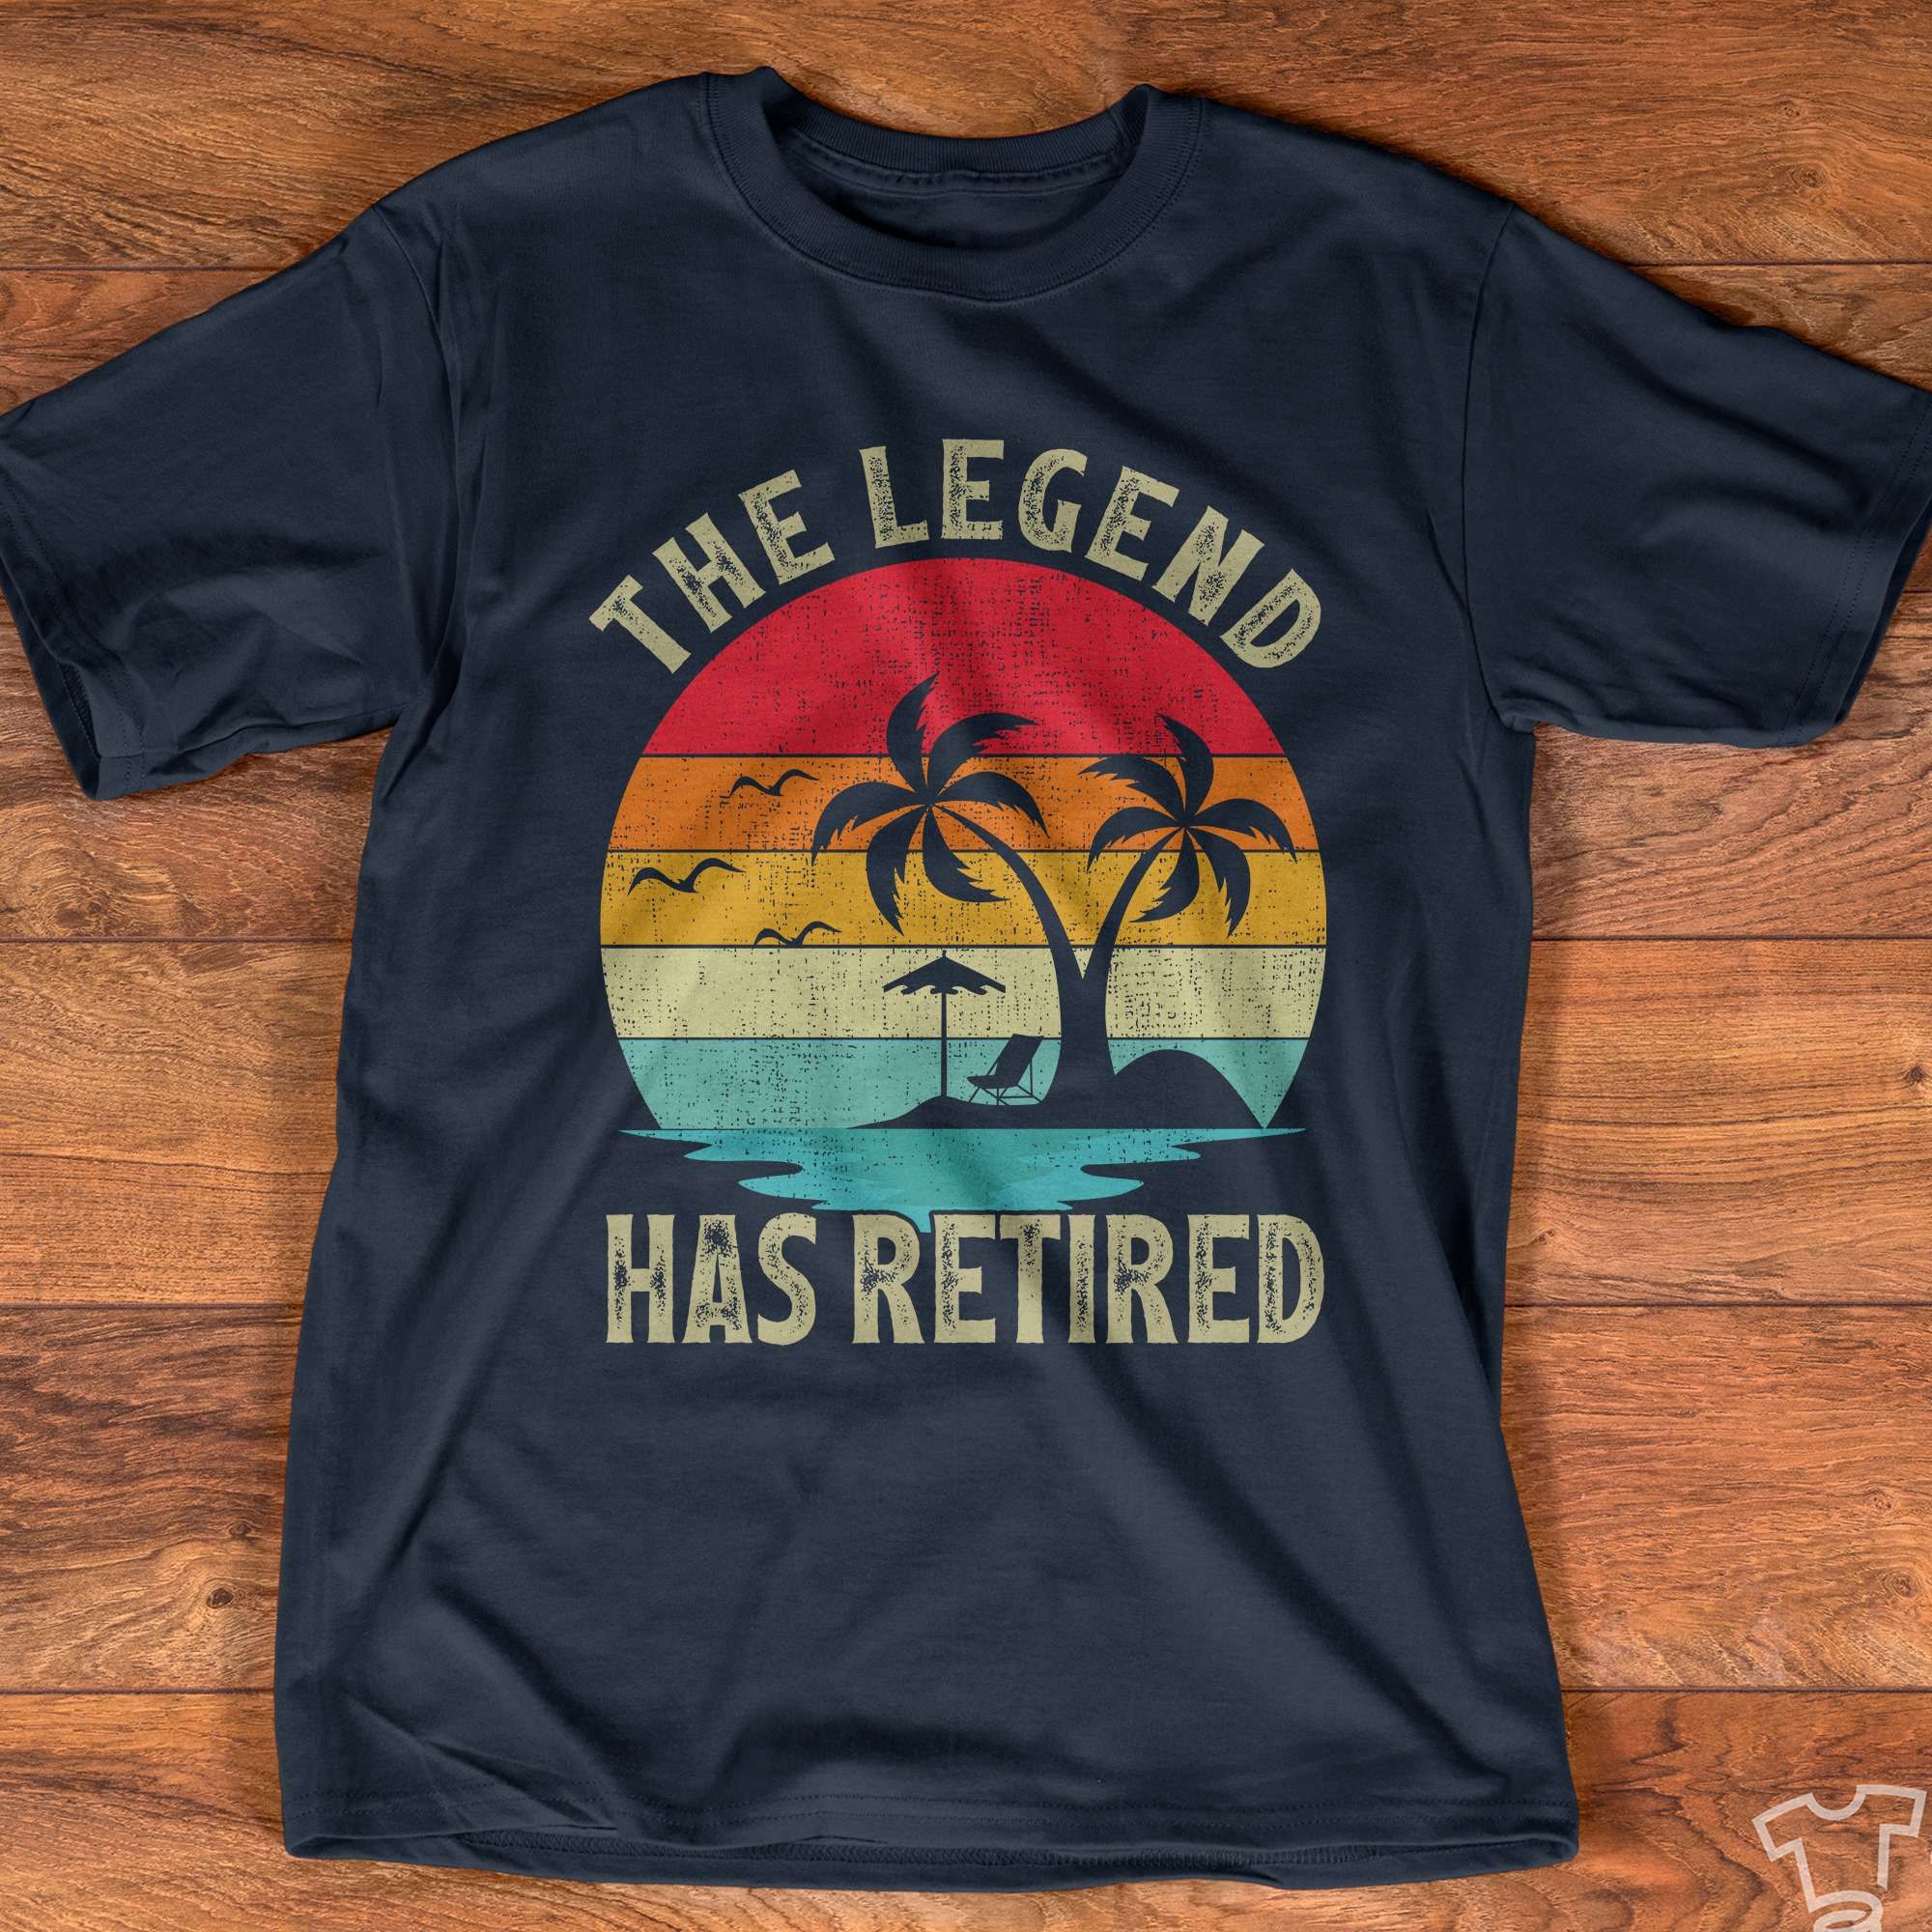 The legend has retired - Summer vibe, retirement plan on beach